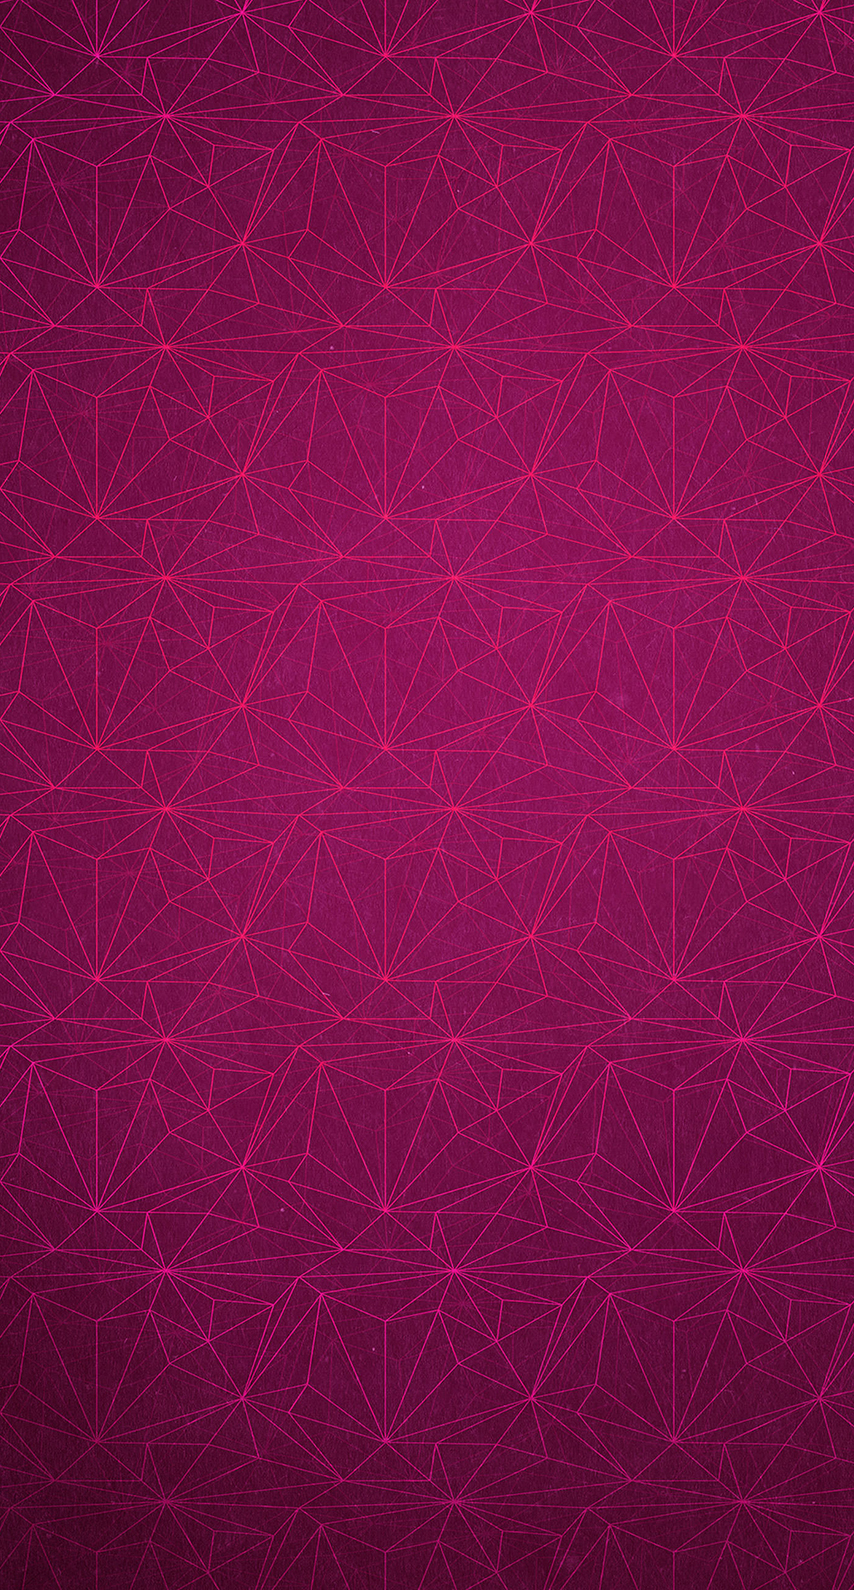 iphone 6s wallpaper,rosa,lila,violett,rot,muster